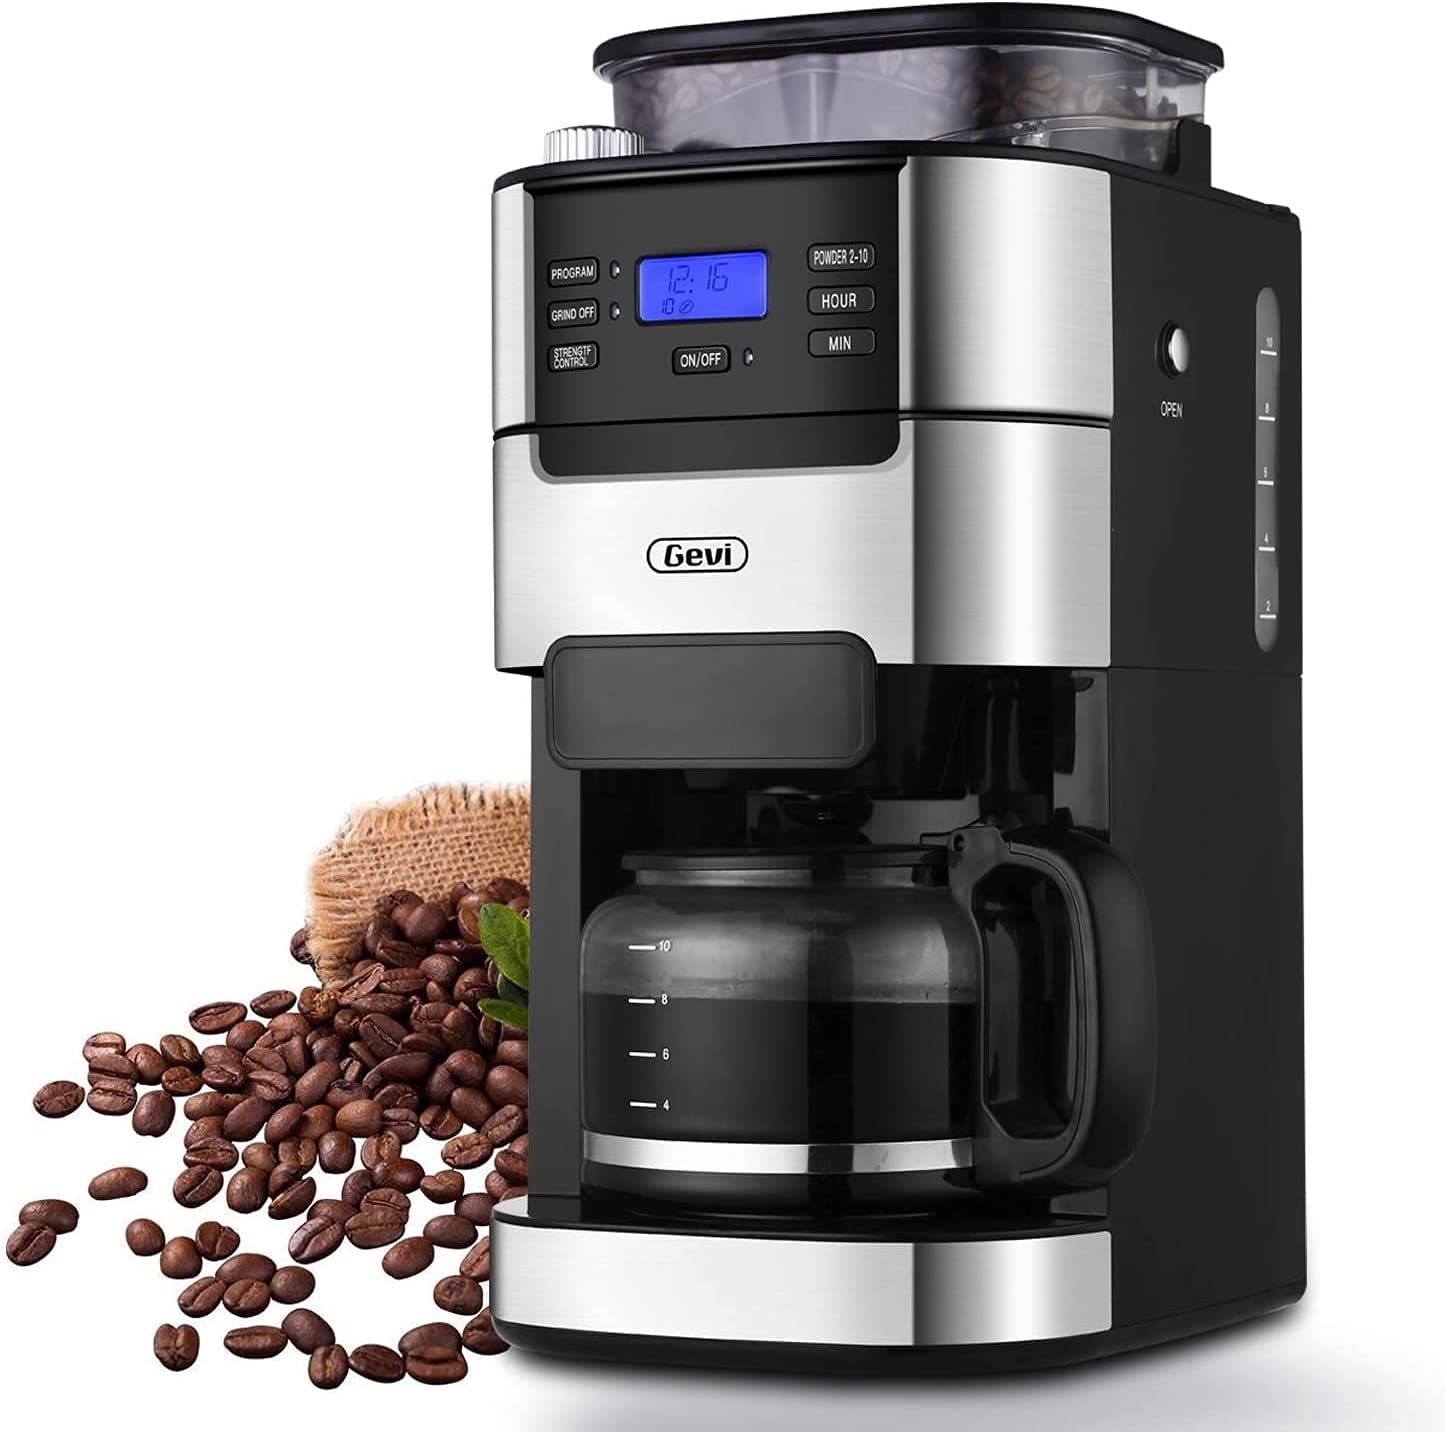 Gevi 5403 10-cup Coffee Maker